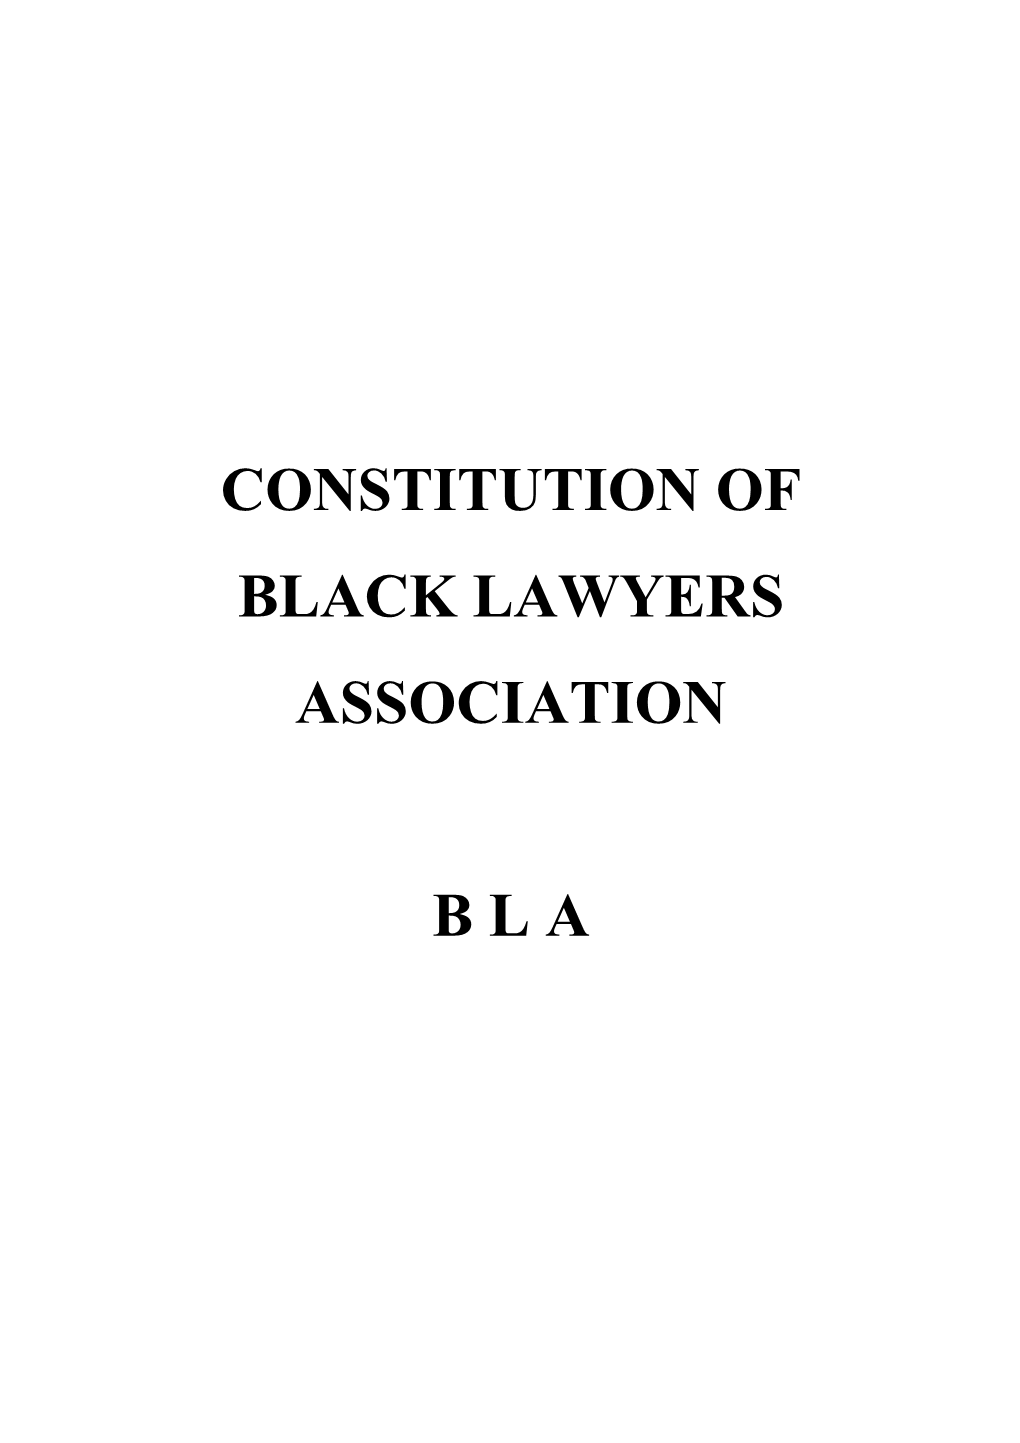 Black Lawyers Association